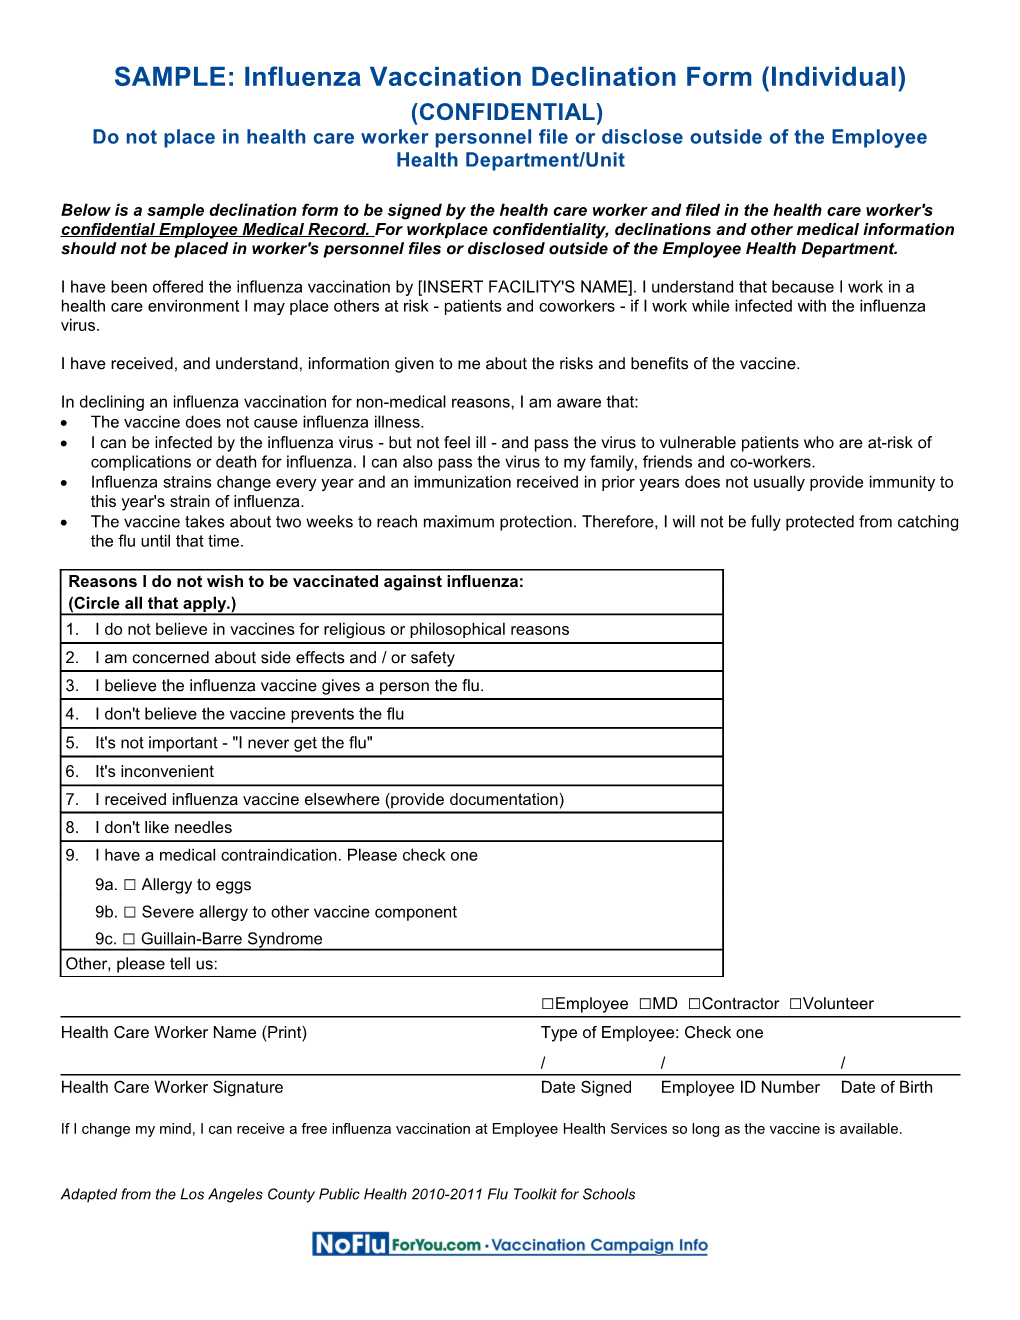 SAMPLE:Influenza Vaccination Declination Form (Individual)